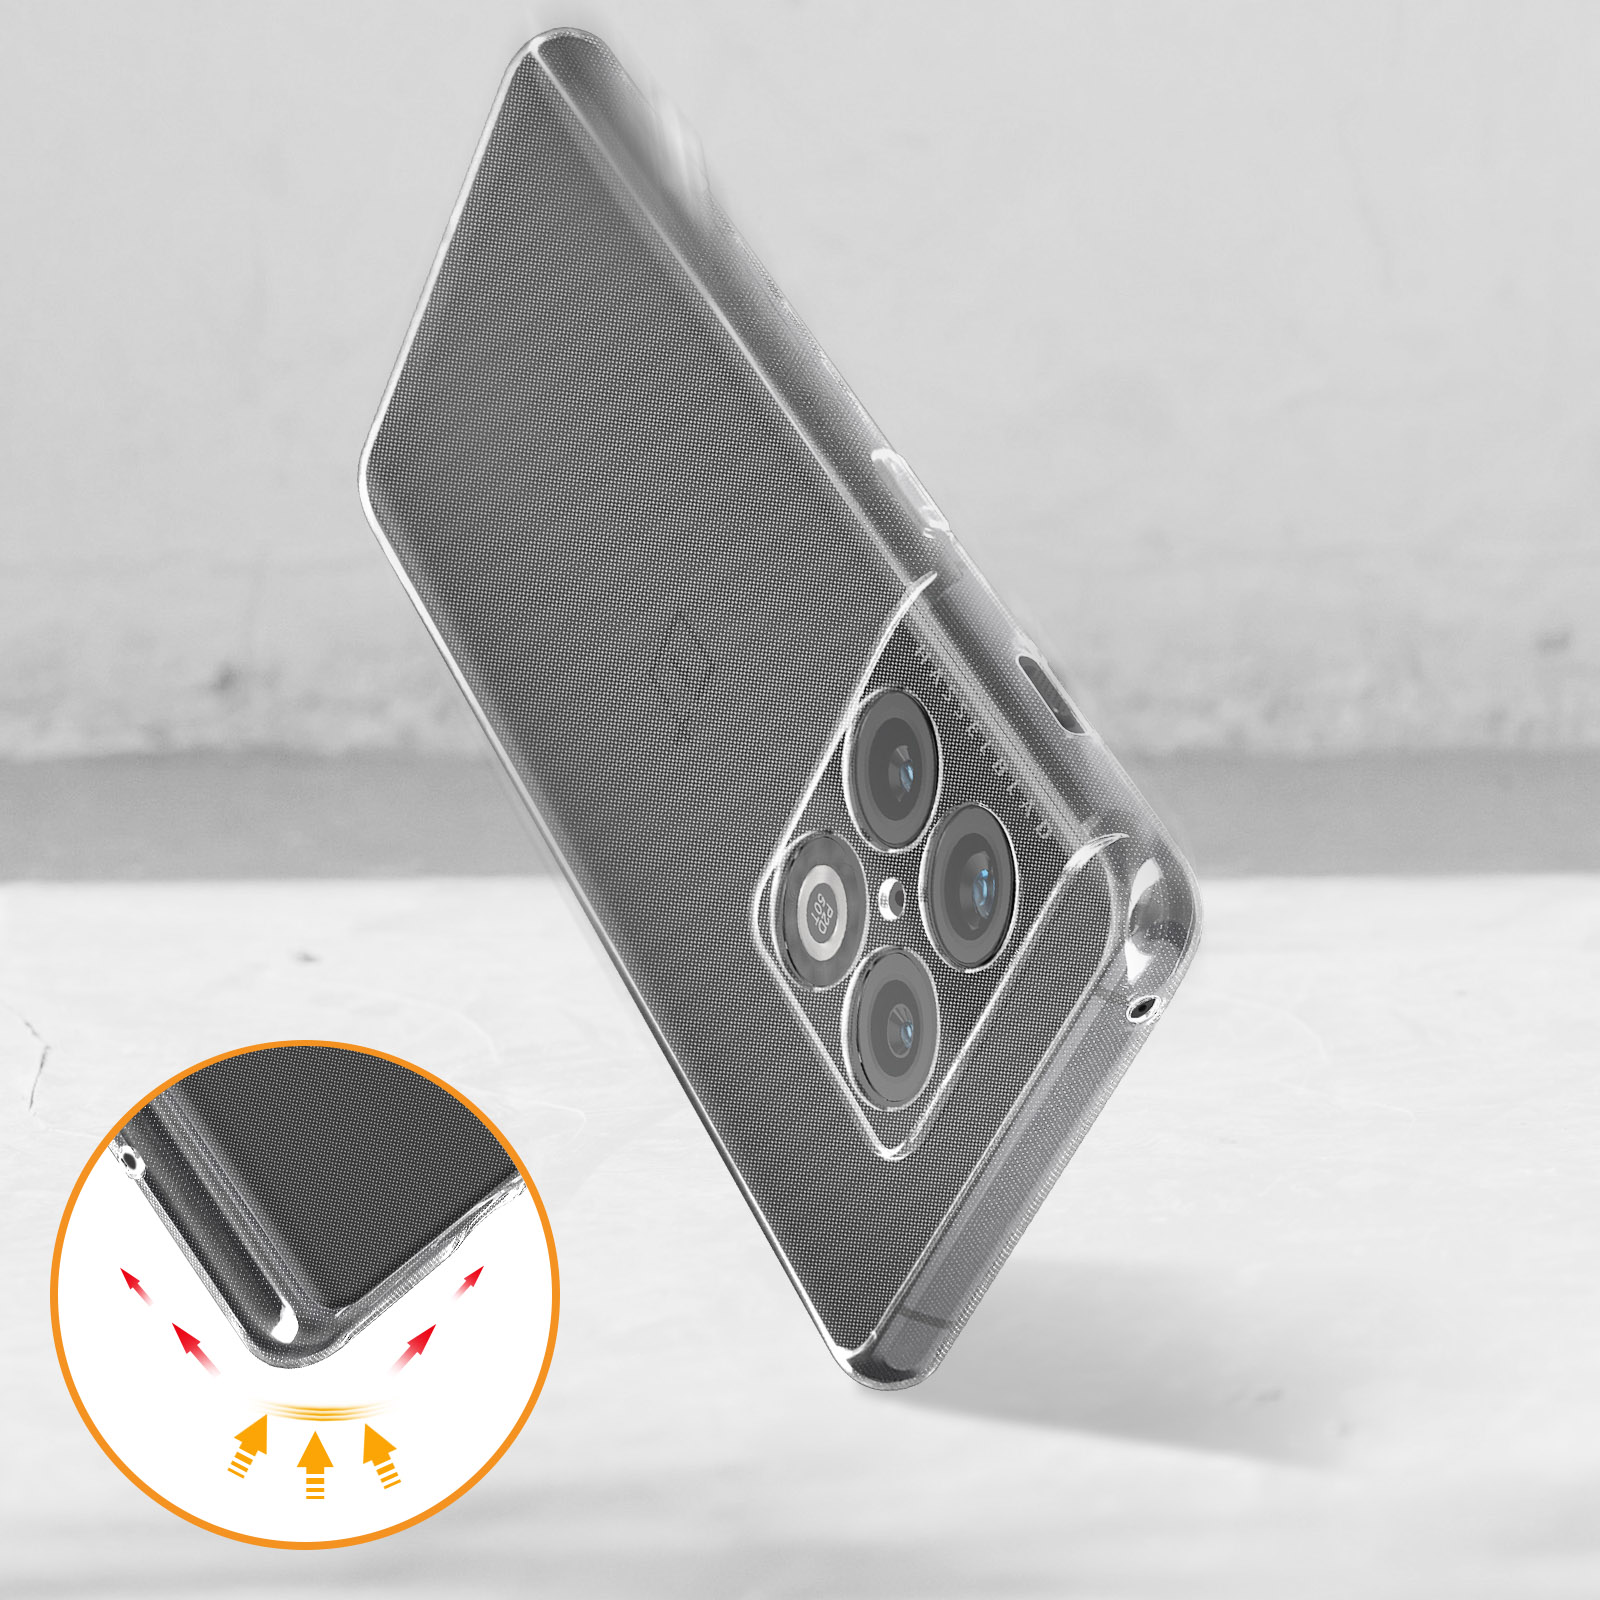 5G, Gelhülle Transparent OnePlus, Pro Series, Backcover, AVIZAR 10